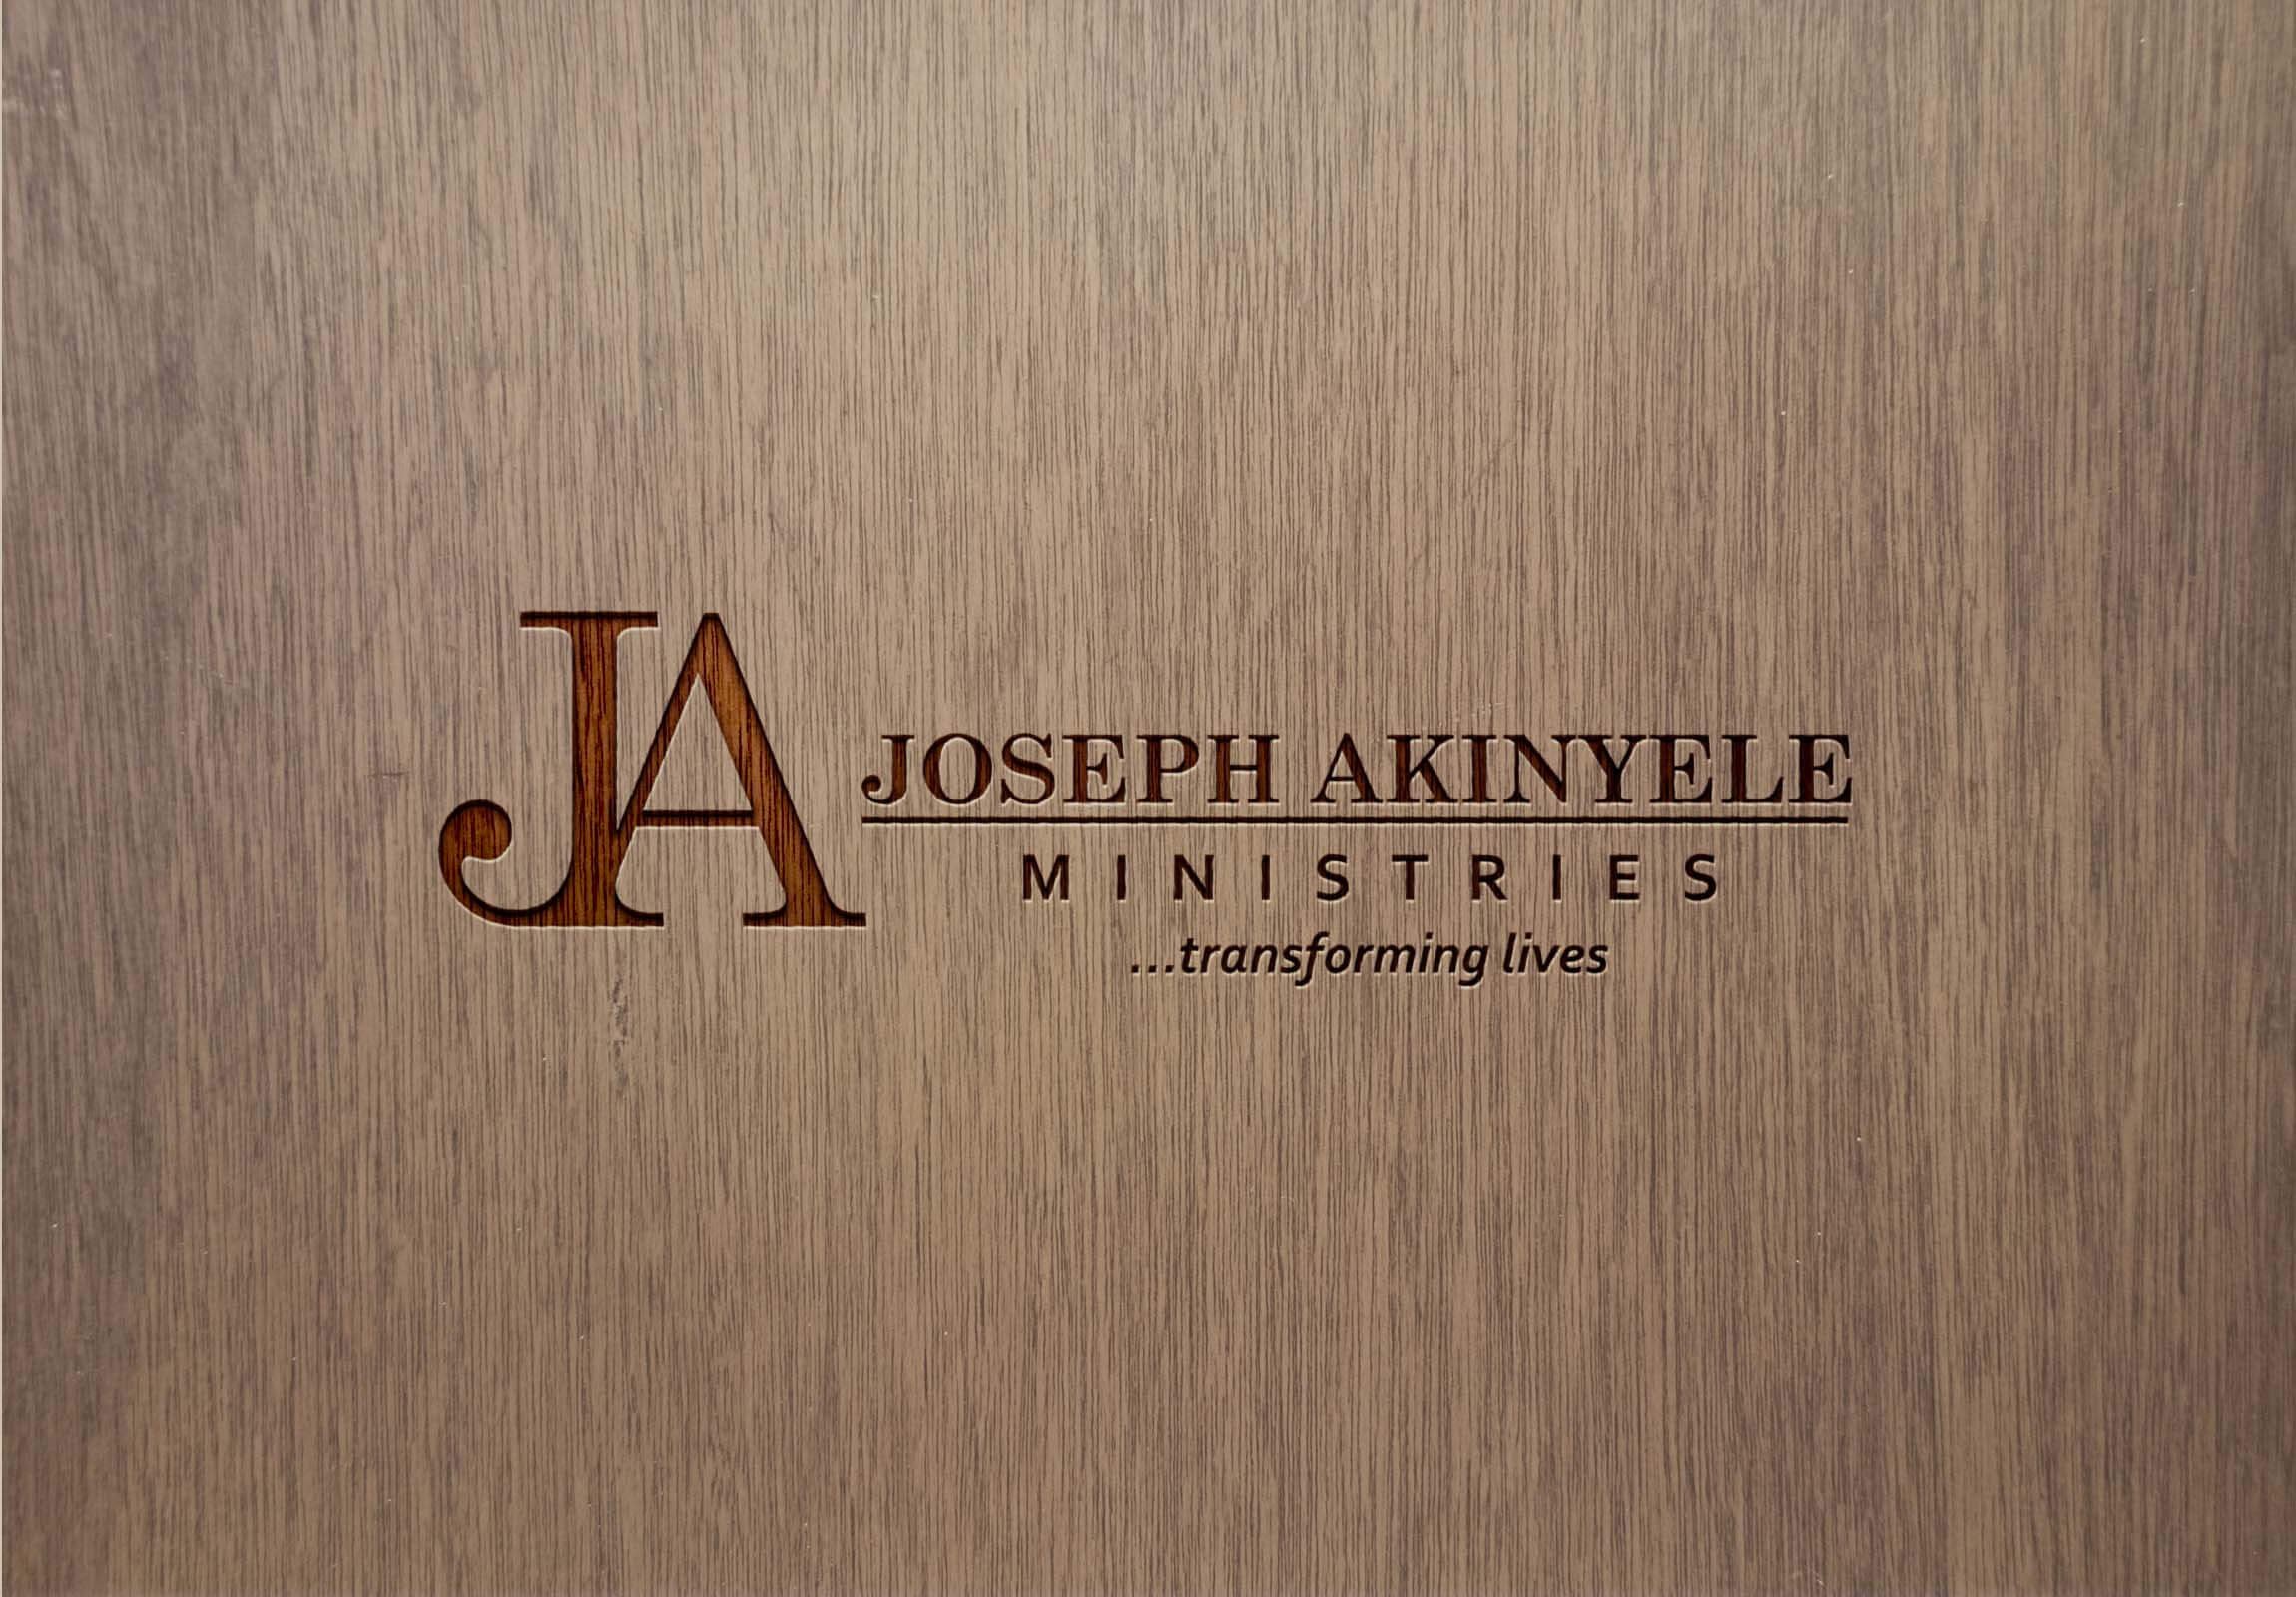 Joseph Akinyele Ministries Logo Design